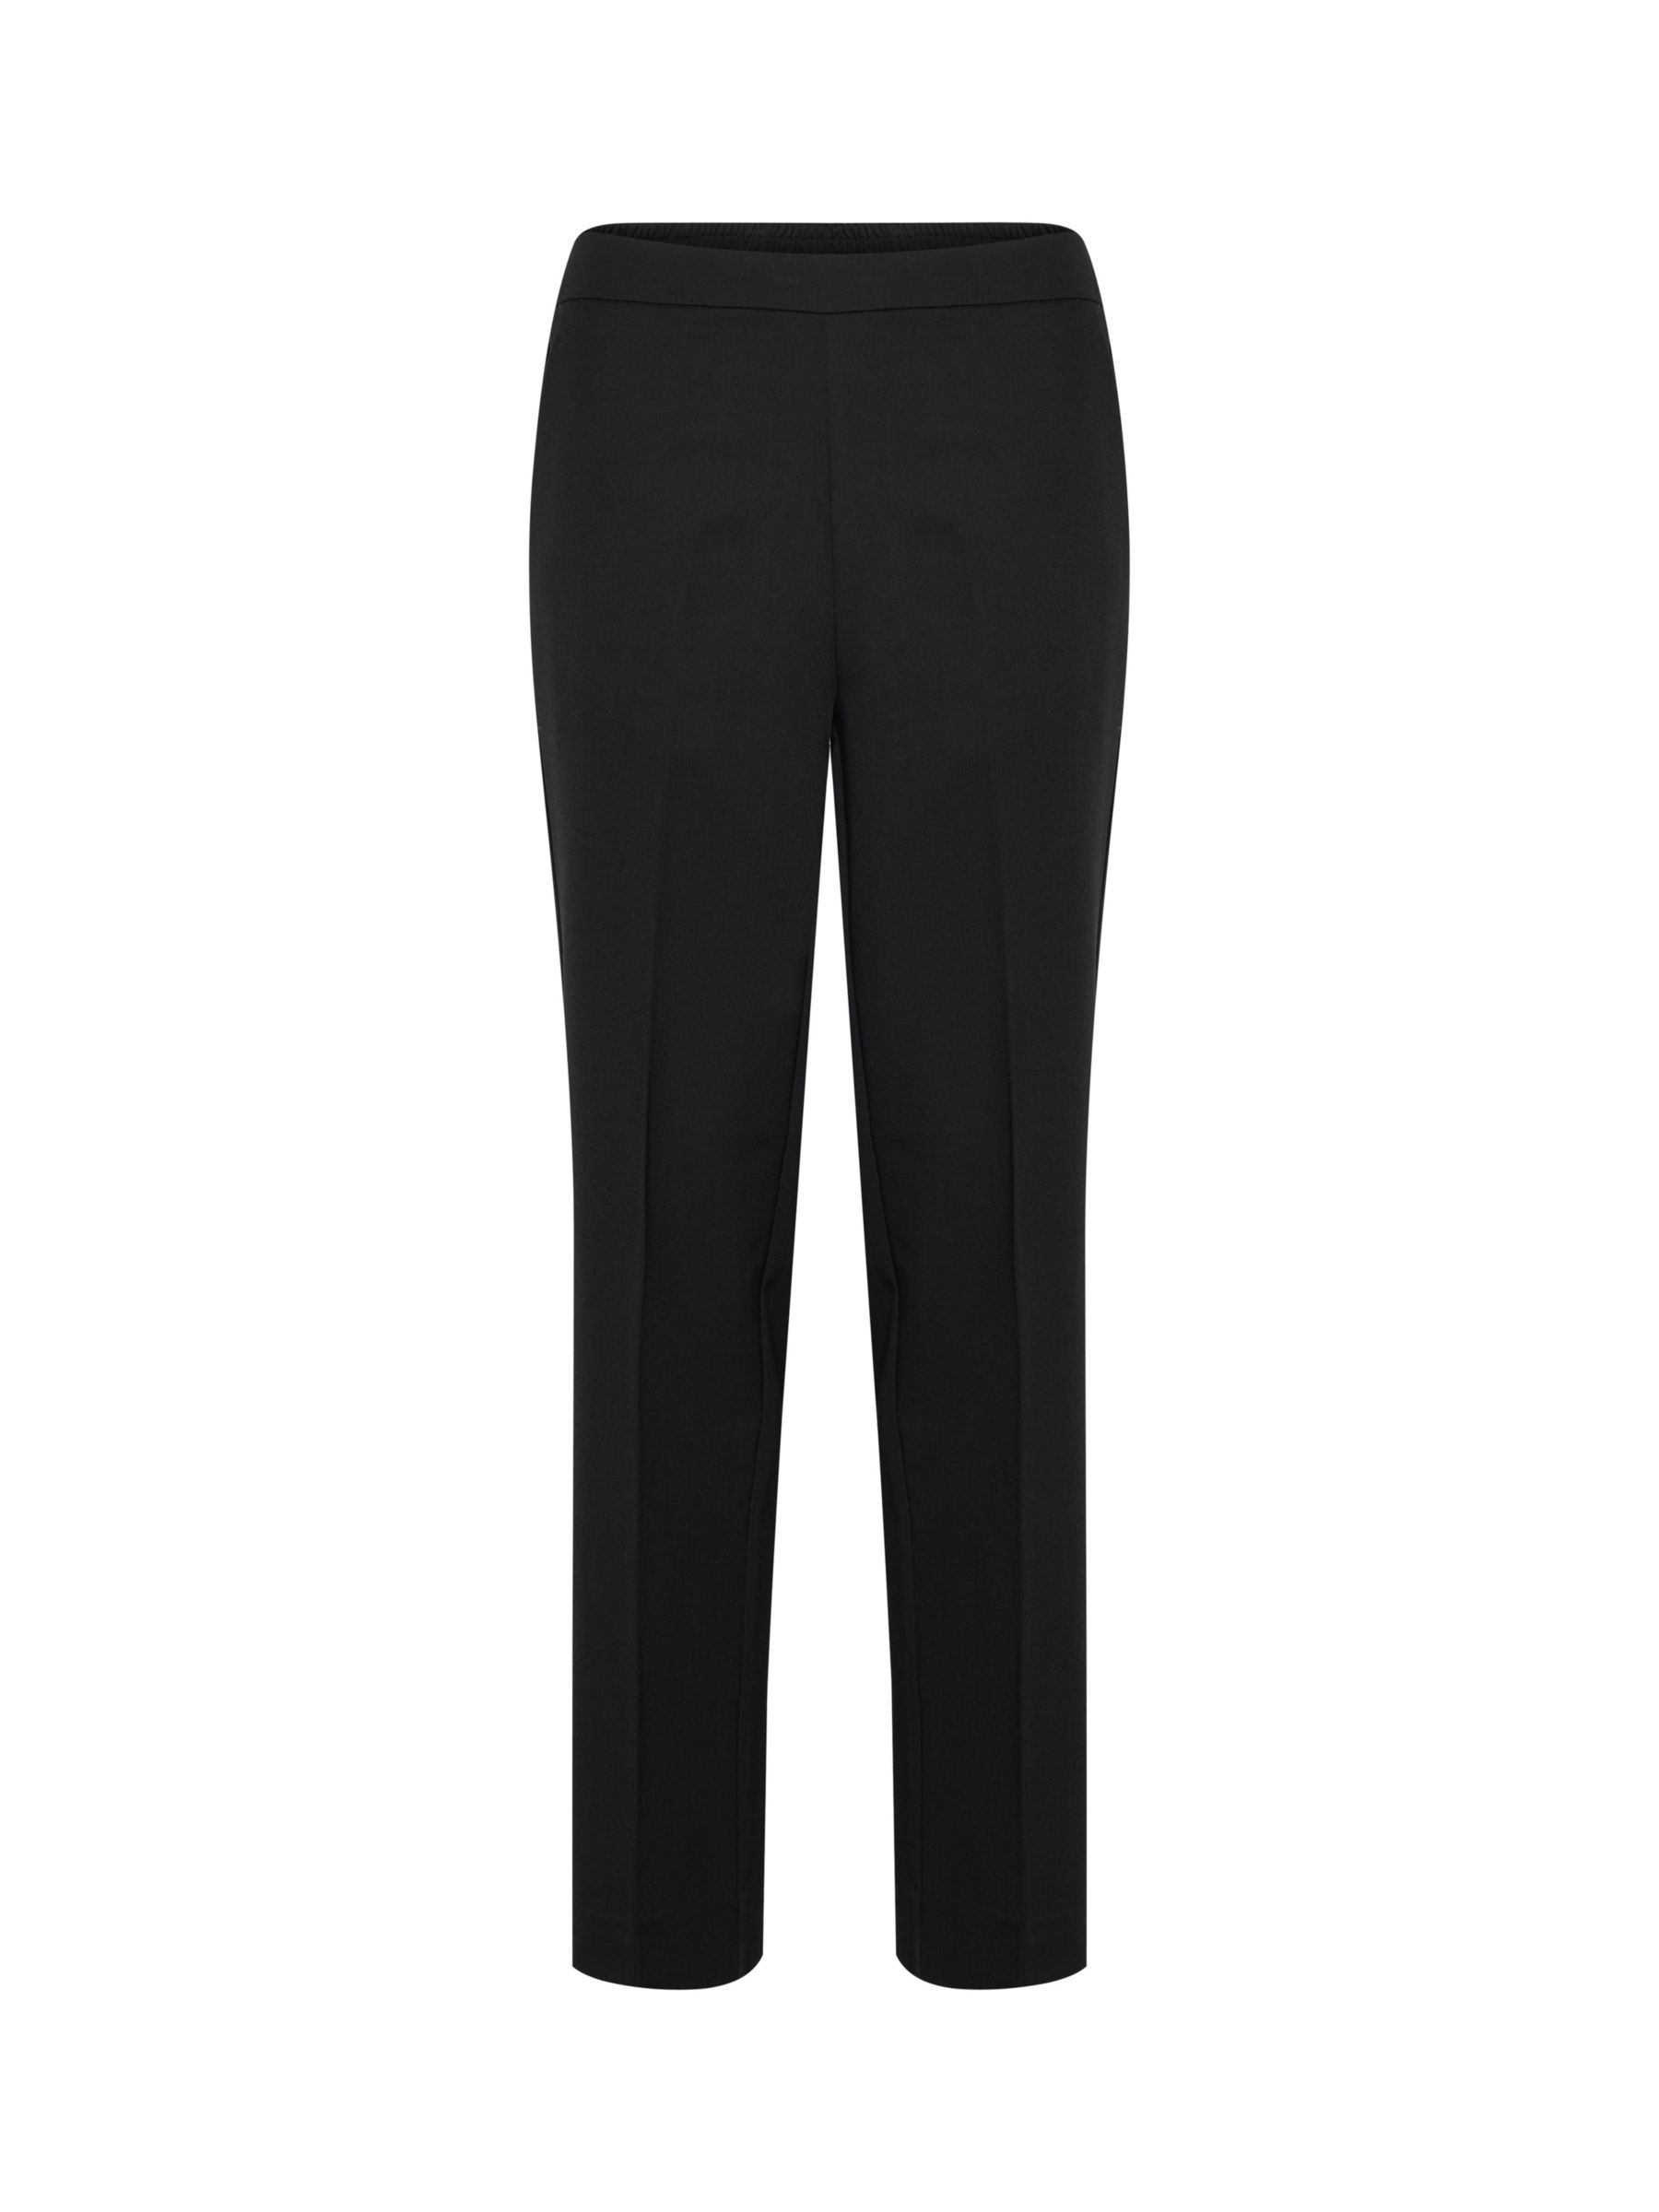 KAFFE Sakura Slim Tailored Trousers, Black Deep at John Lewis & Partners